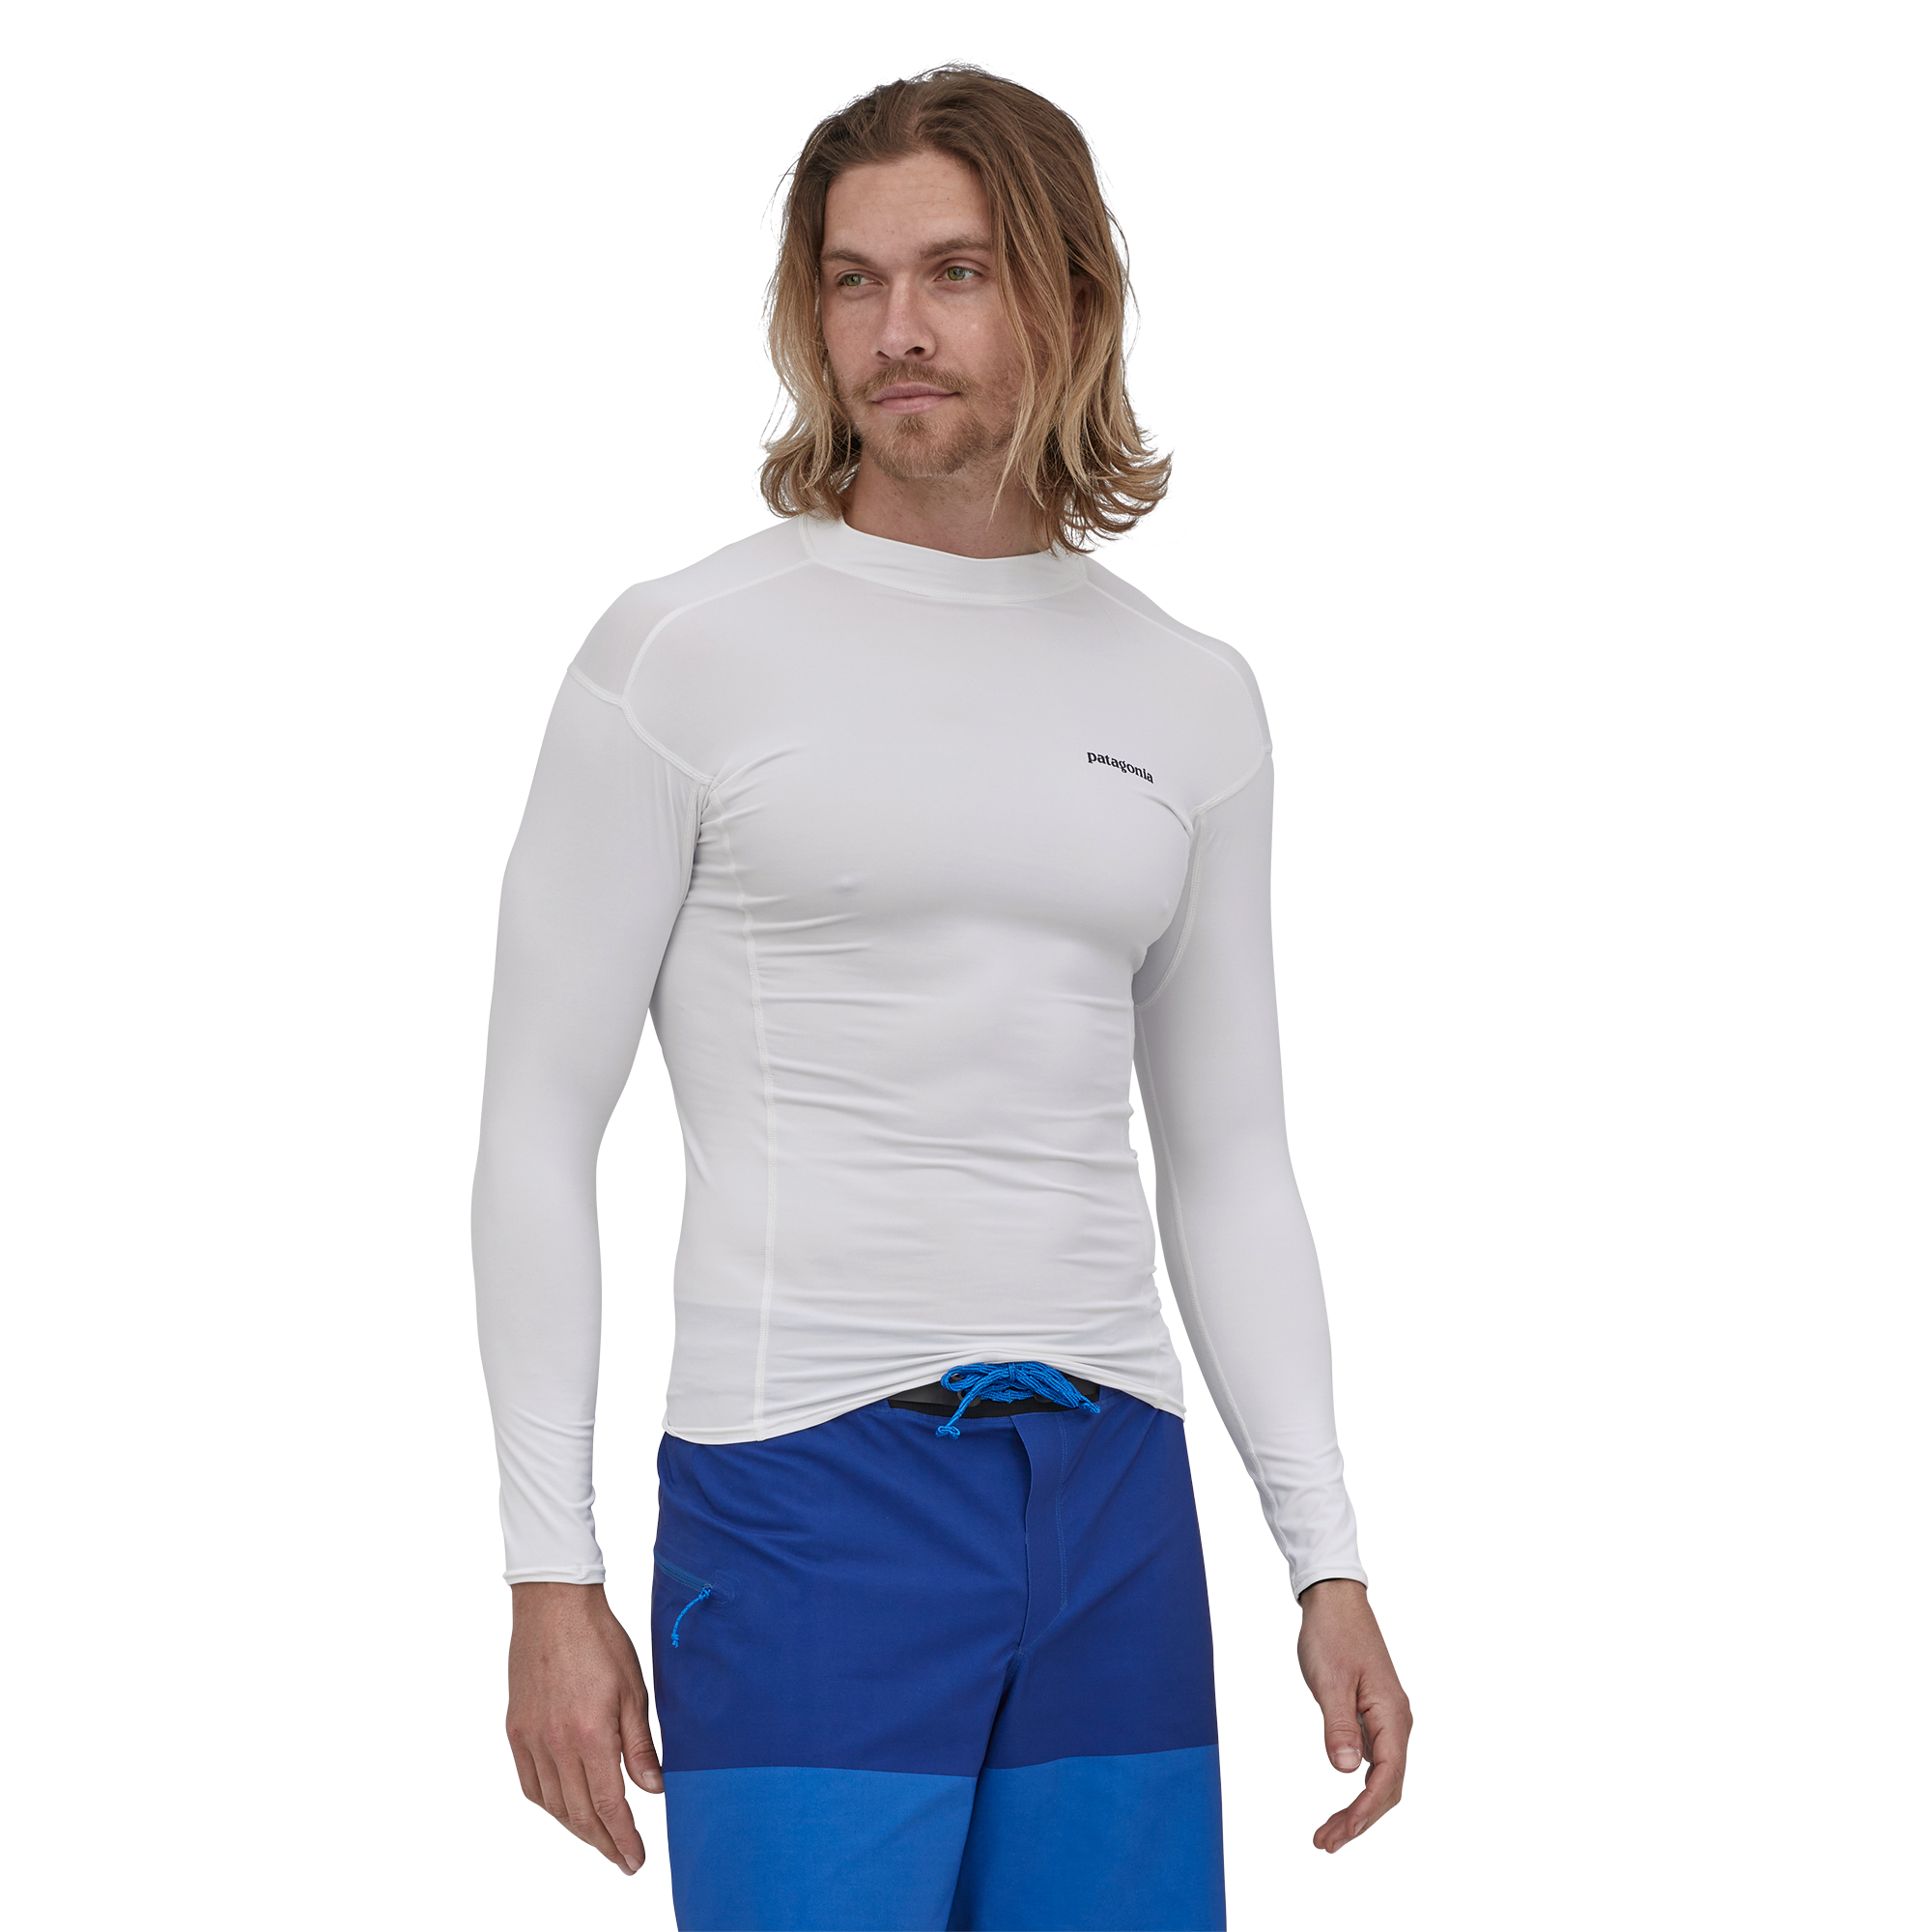 Patagonia Men's Long-Sleeved RØ® UPF Top - Rashguard Surf Shirt